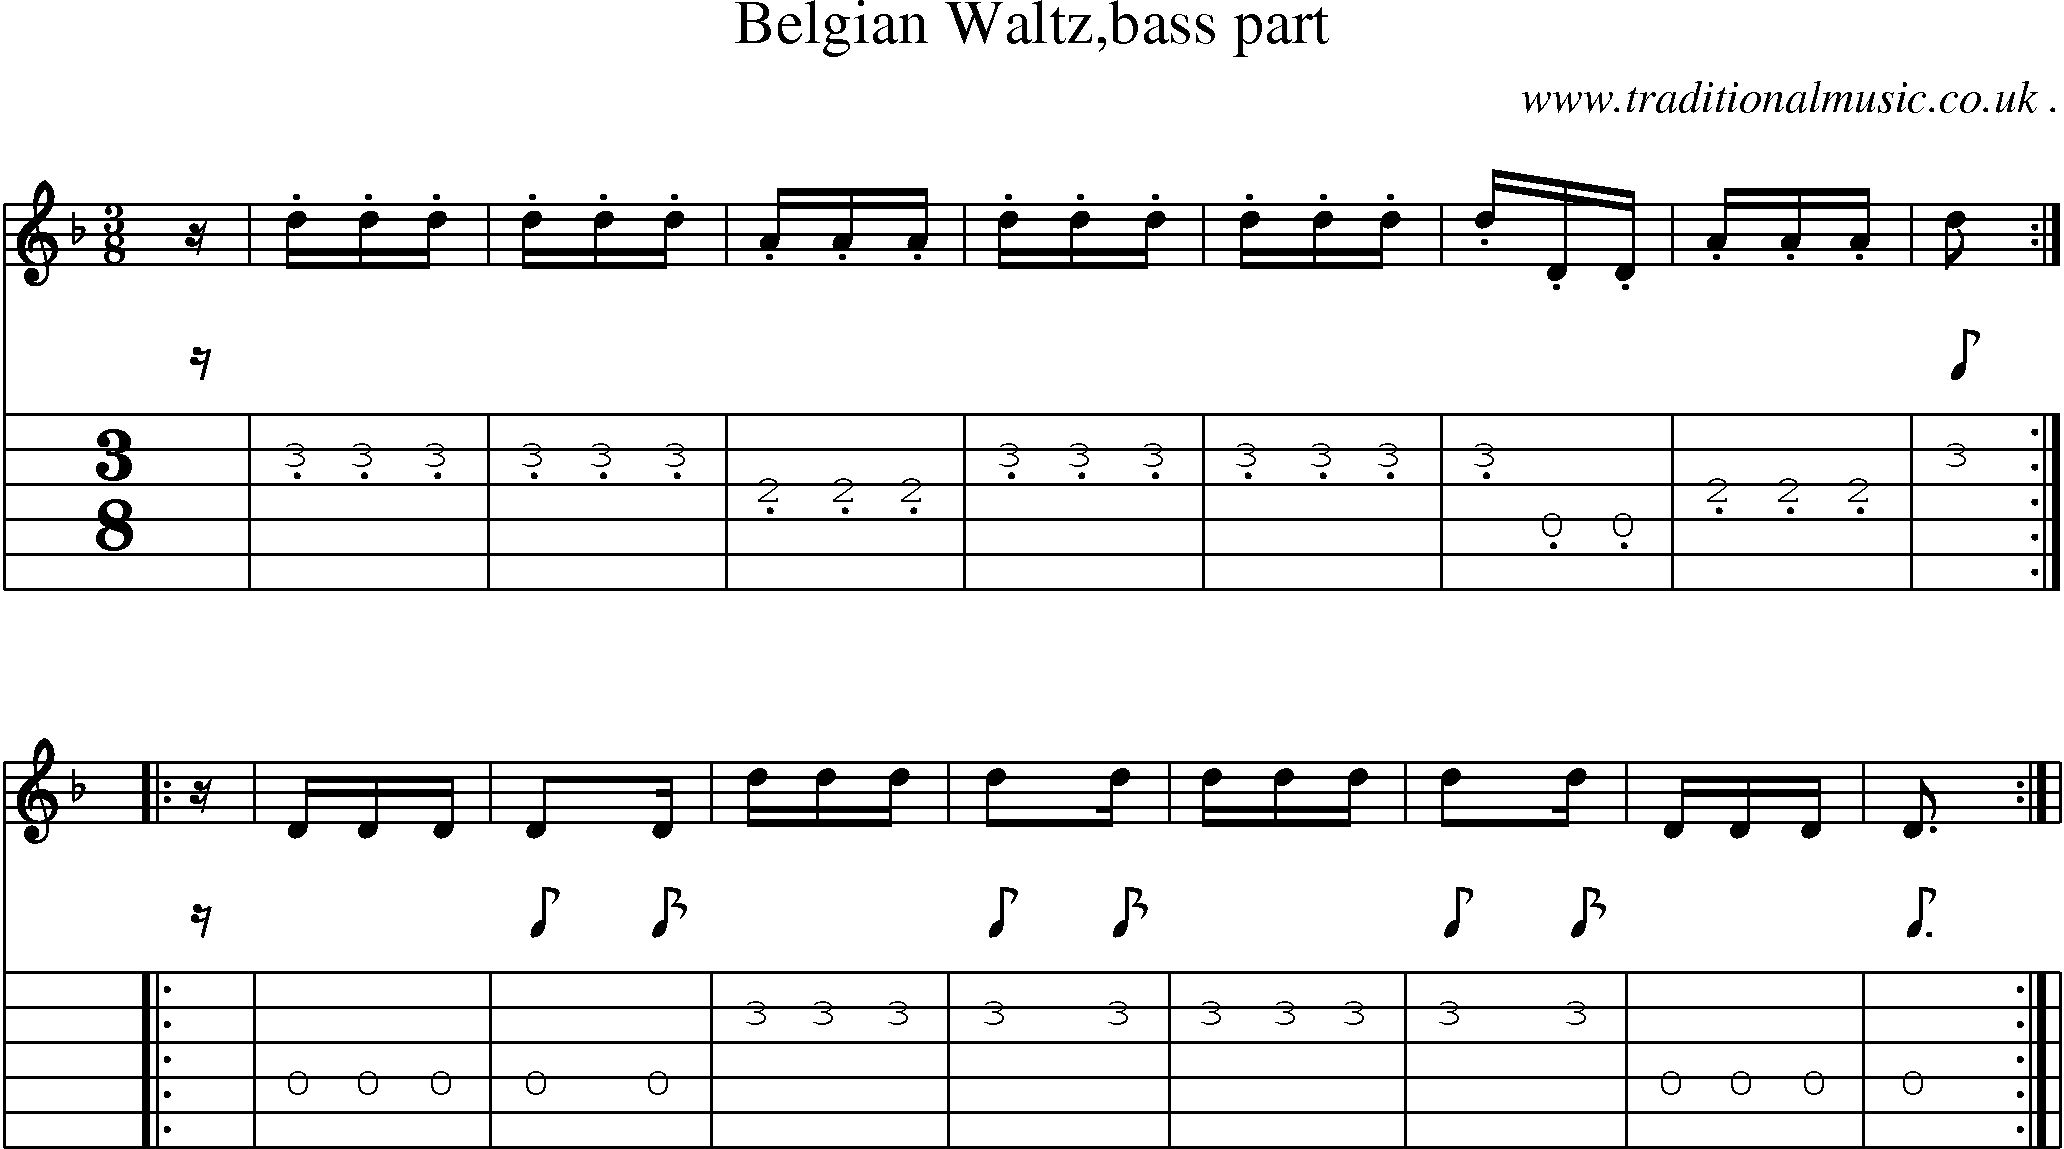 Sheet-Music and Guitar Tabs for Belgian Waltzbass Part